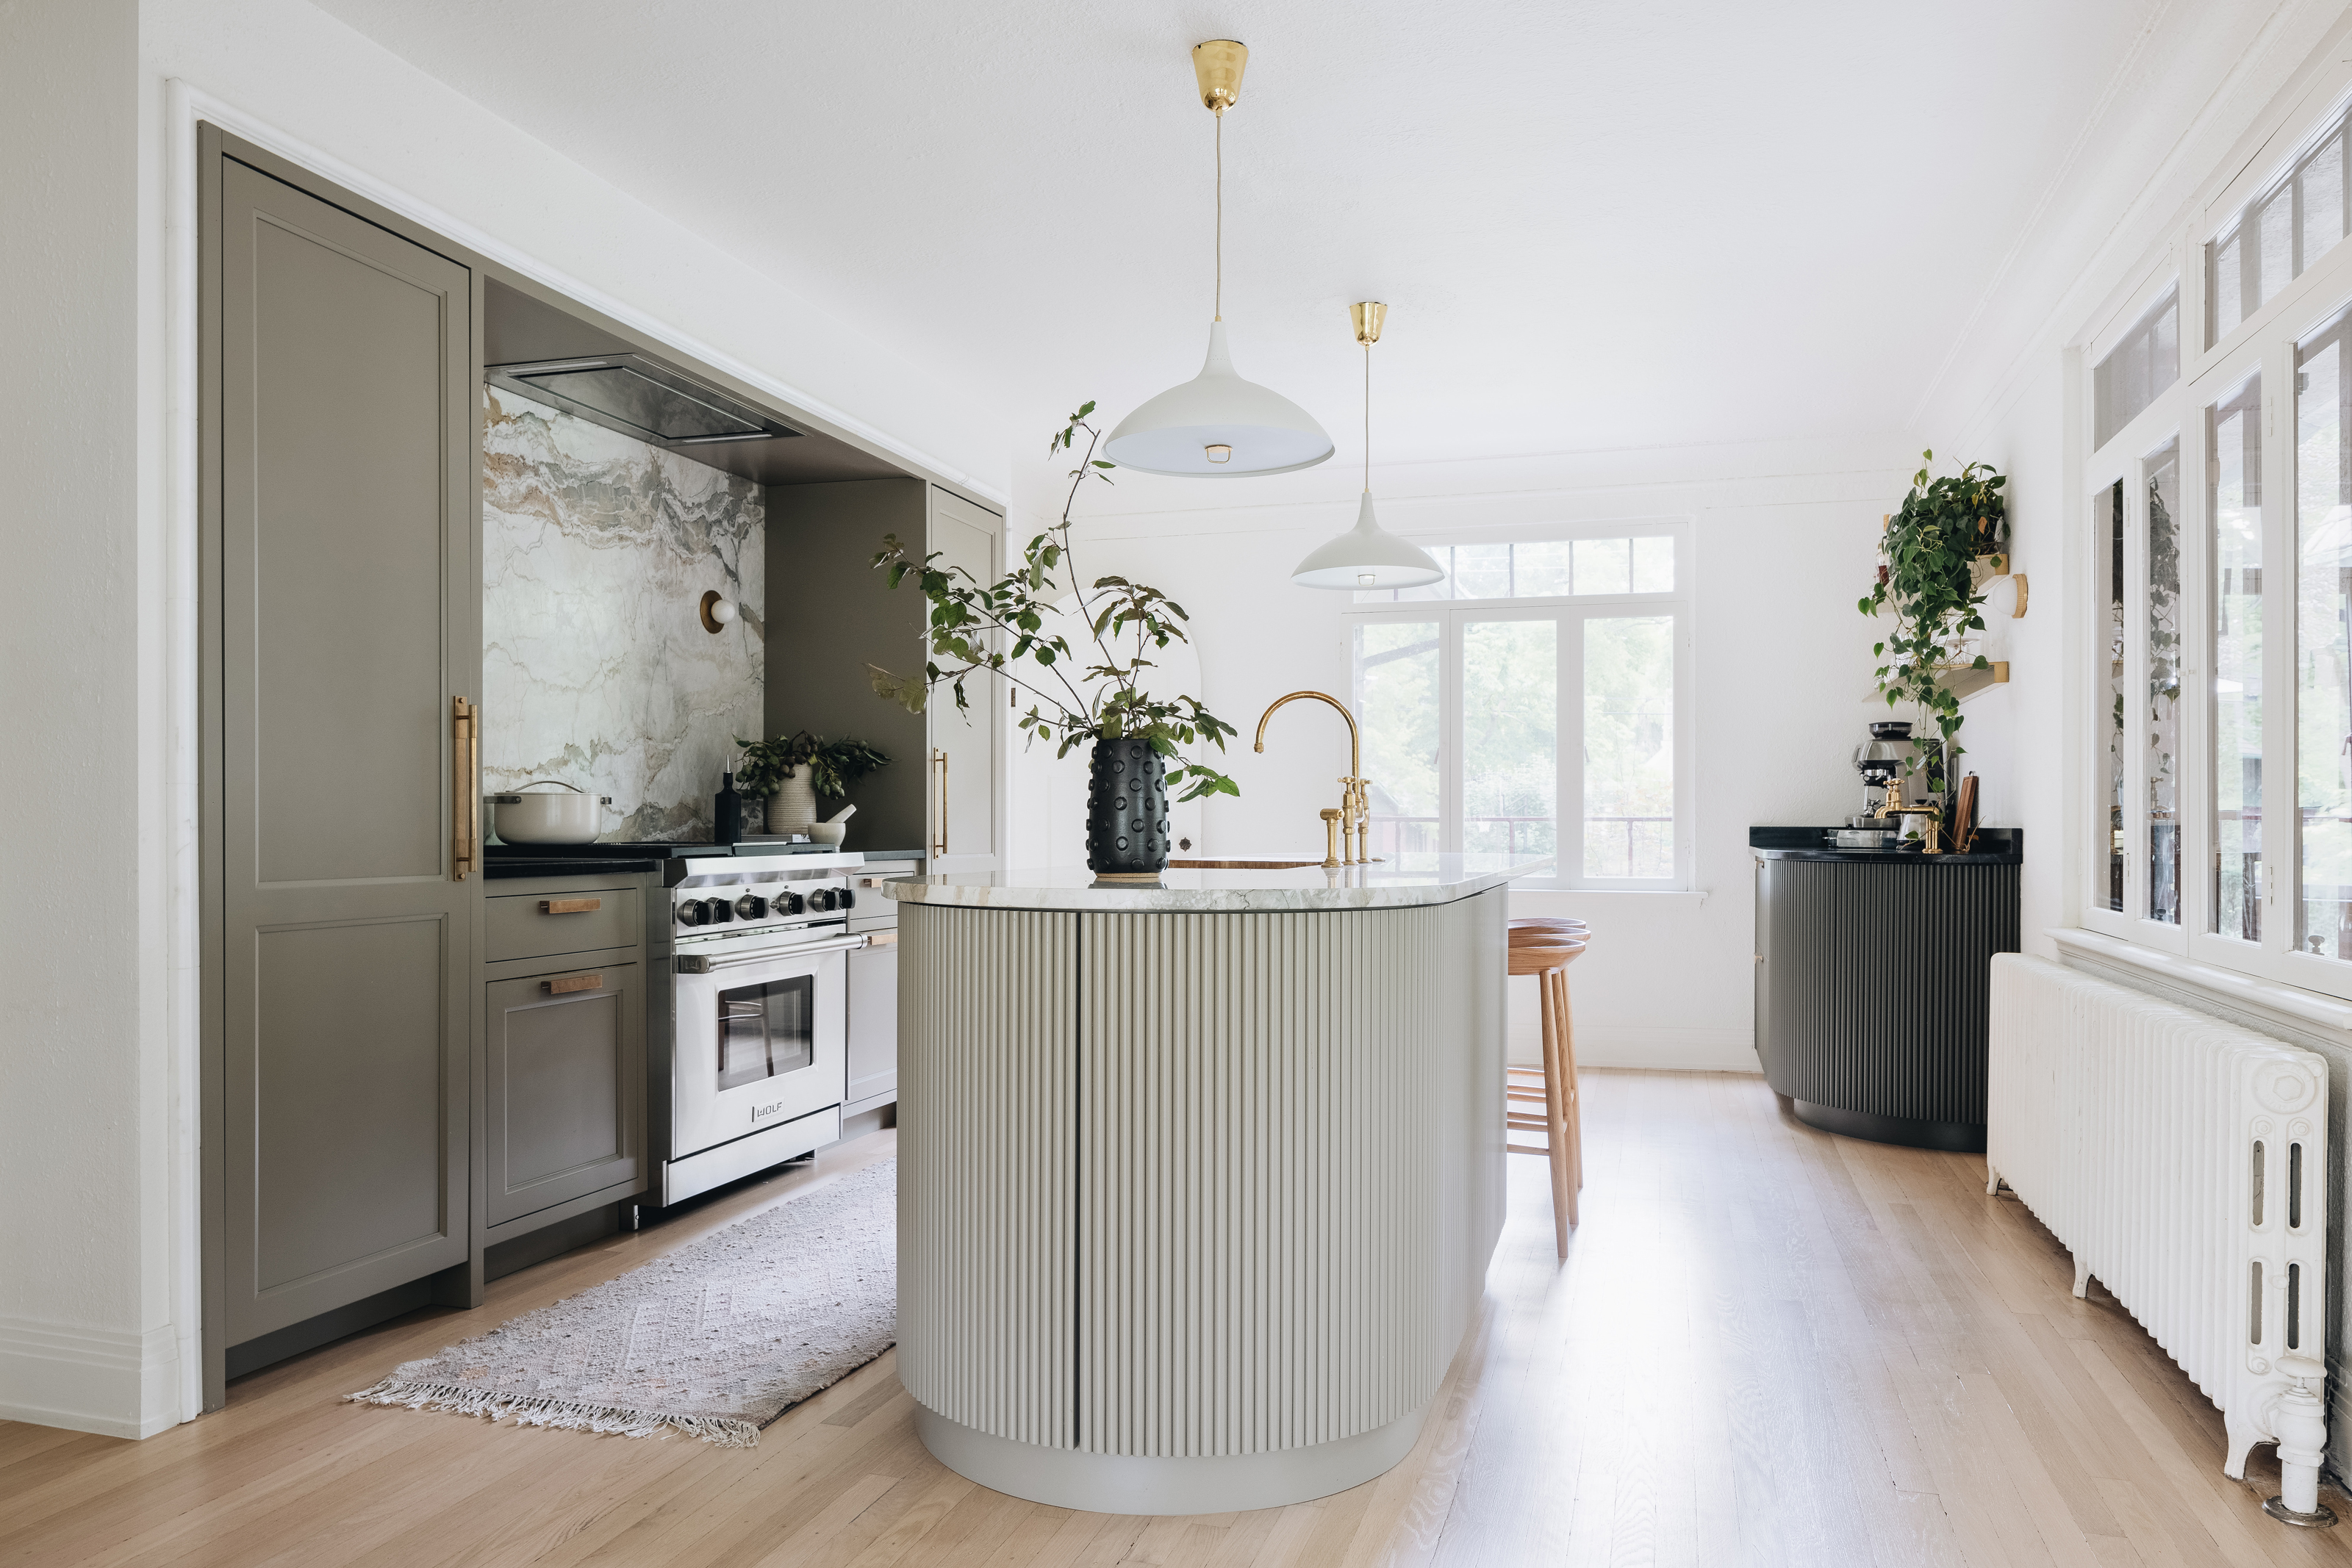 Modern kitchen ideas – 18 ways to remodel your home's design ...